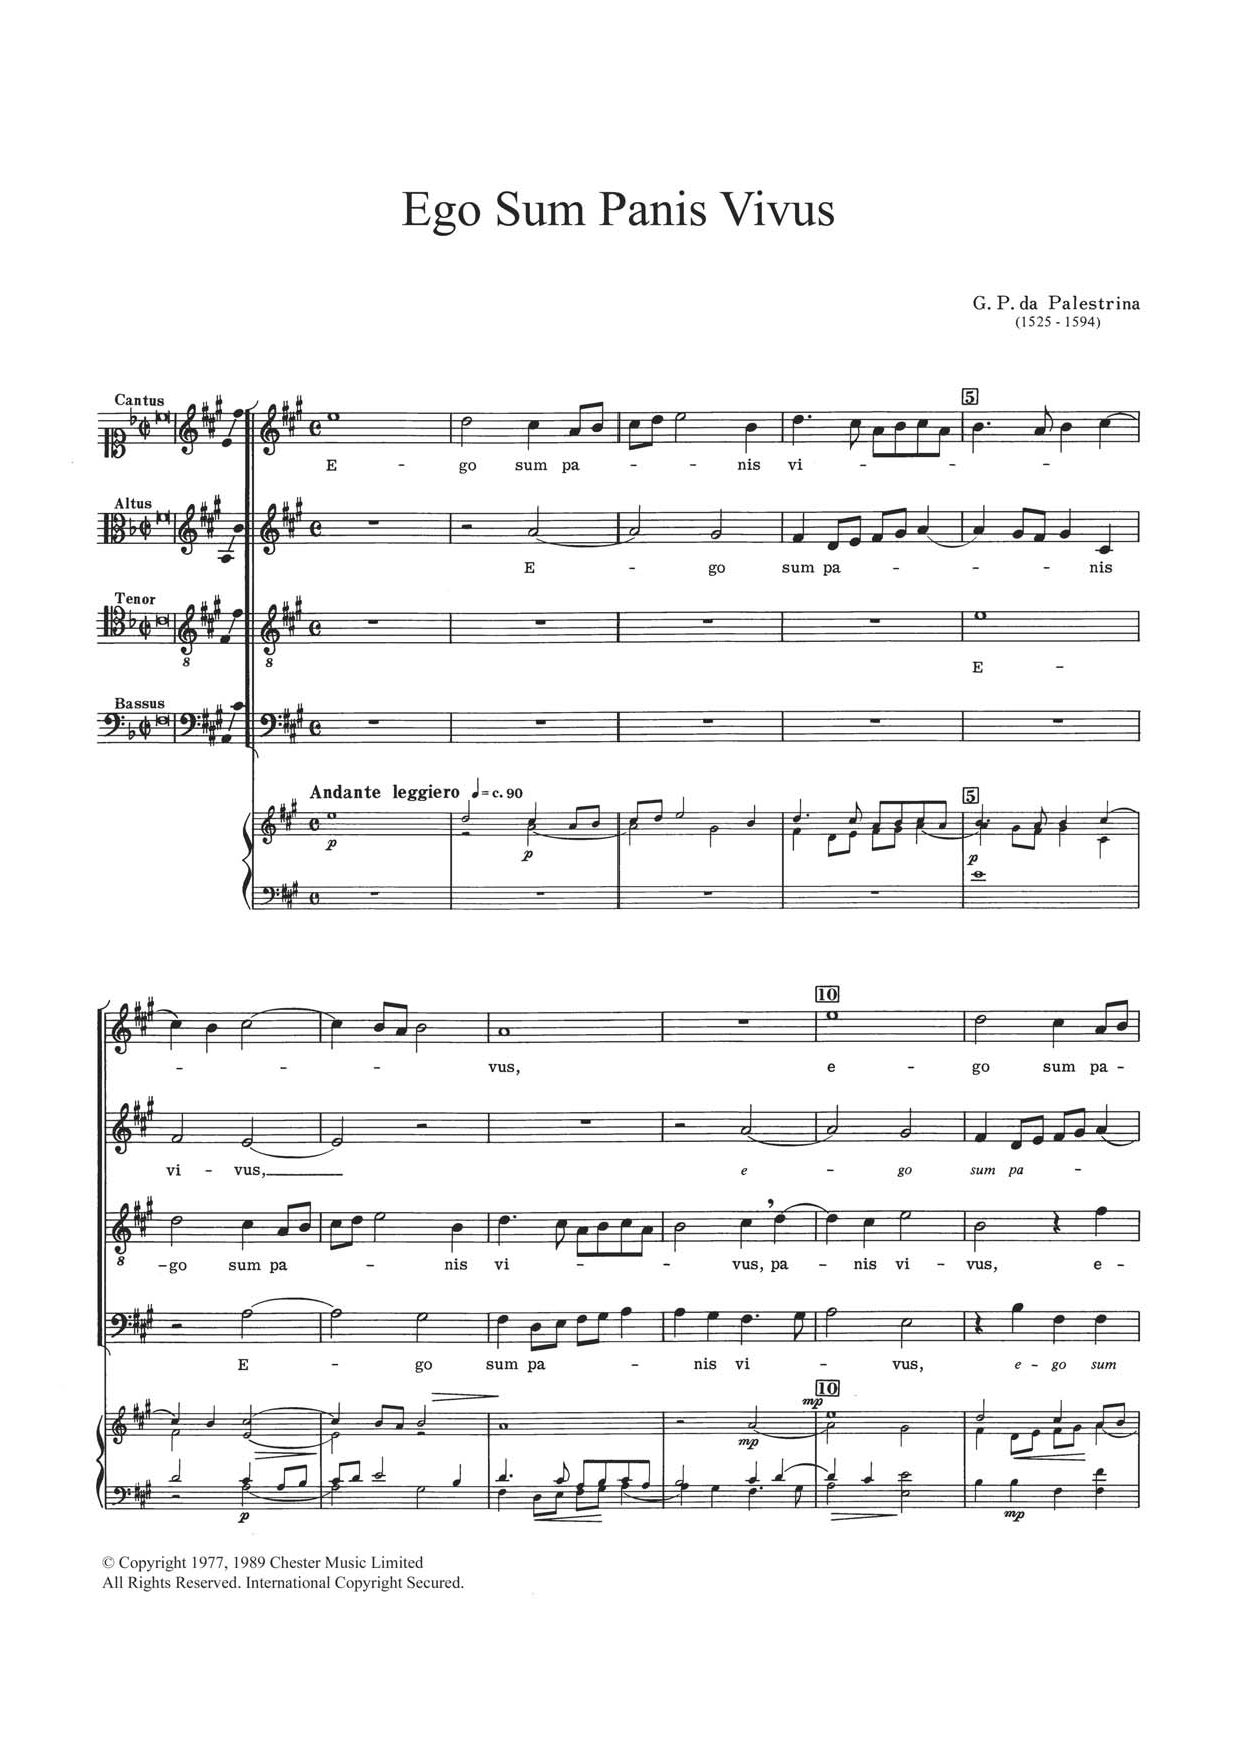 Download Giovanni Palestrina Ego Sum Panis Vivus Sheet Music